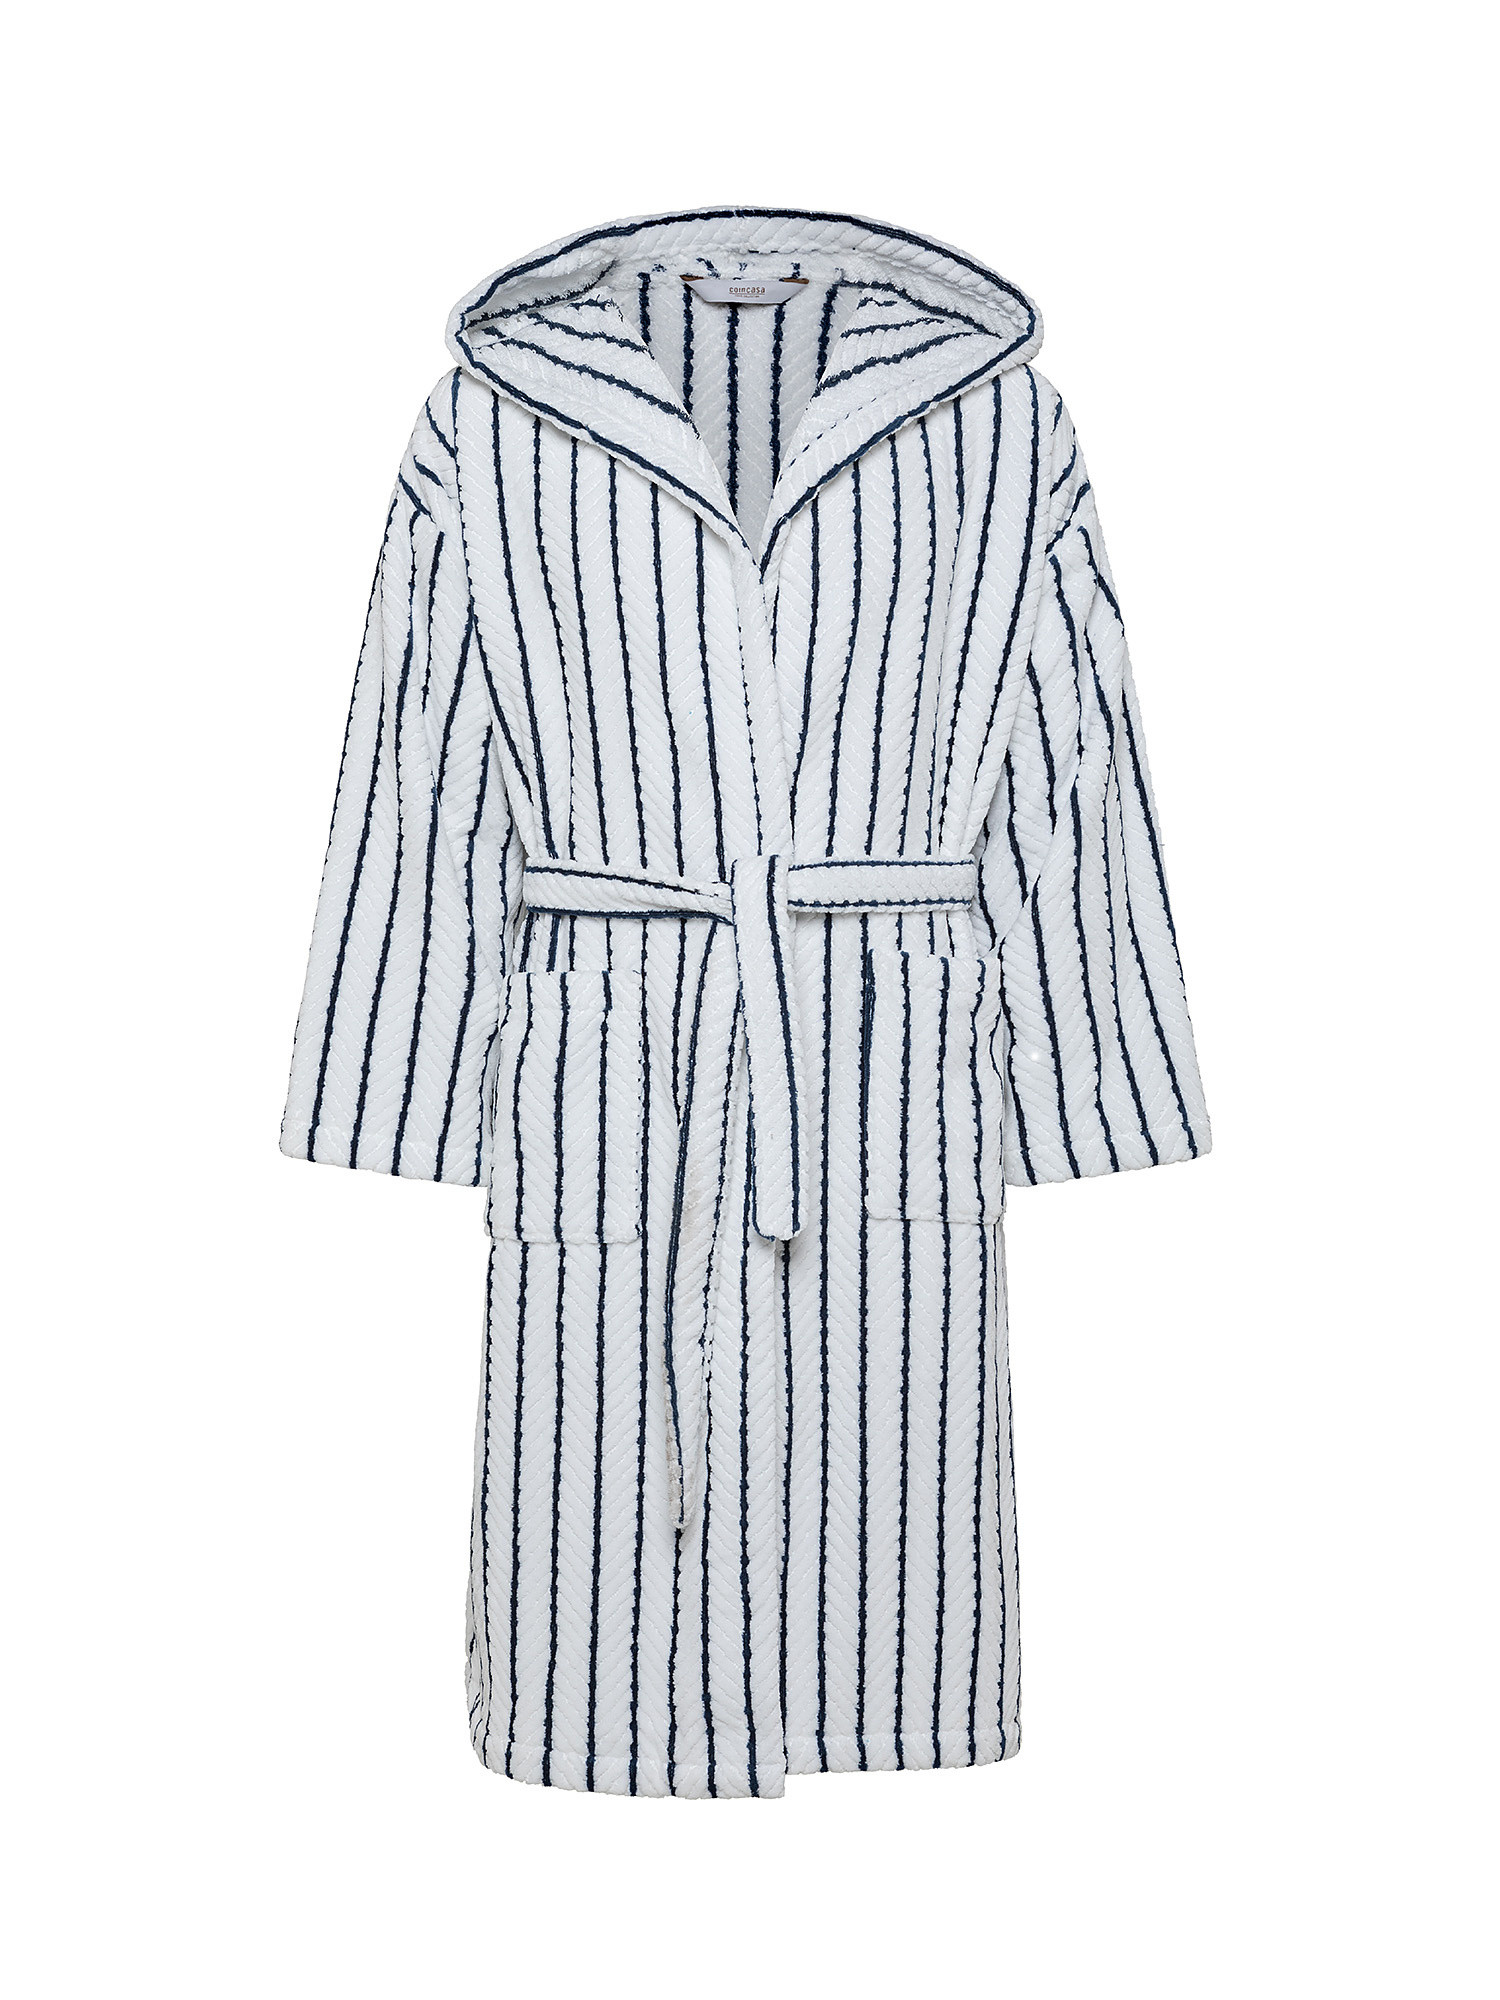 Striped velor cotton bathrobe, Blue, large image number 0